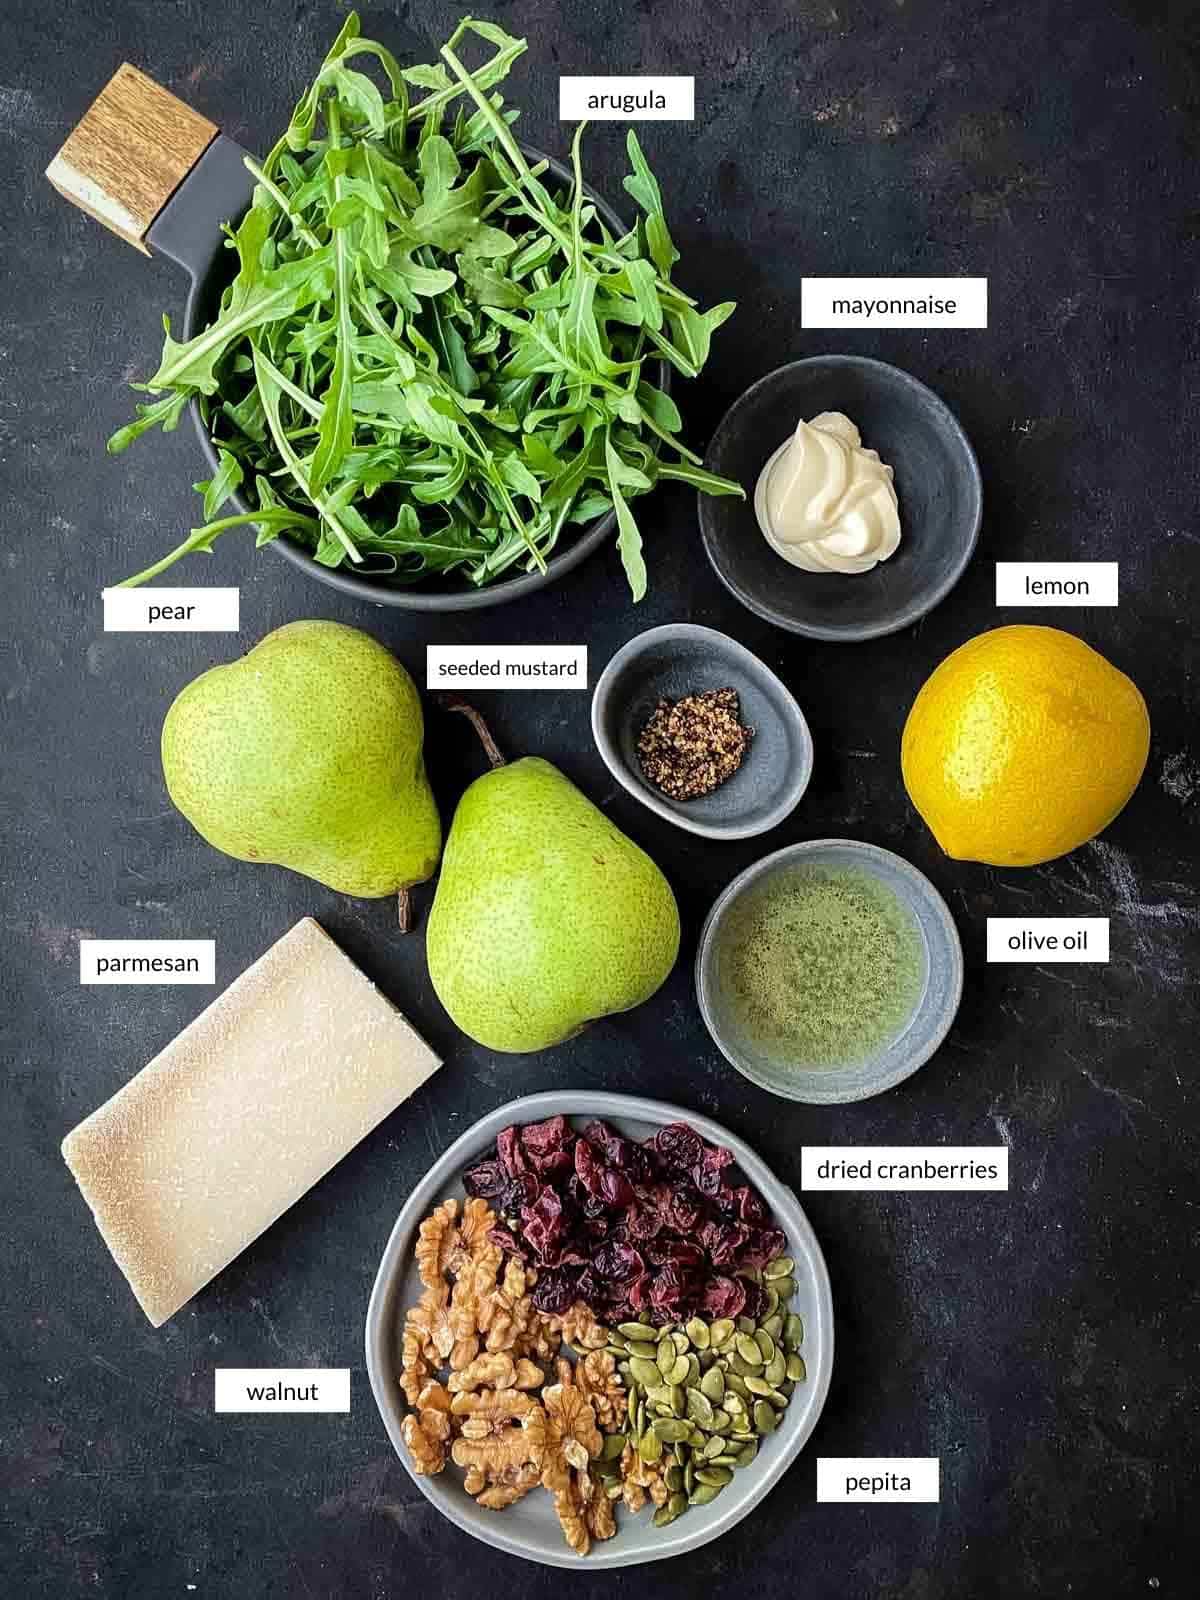 pear salad ingredients with arugula, pear, parmesan, walnuts, pepita, dried cranberries, mayo, oil, lemon and seeded mustard.